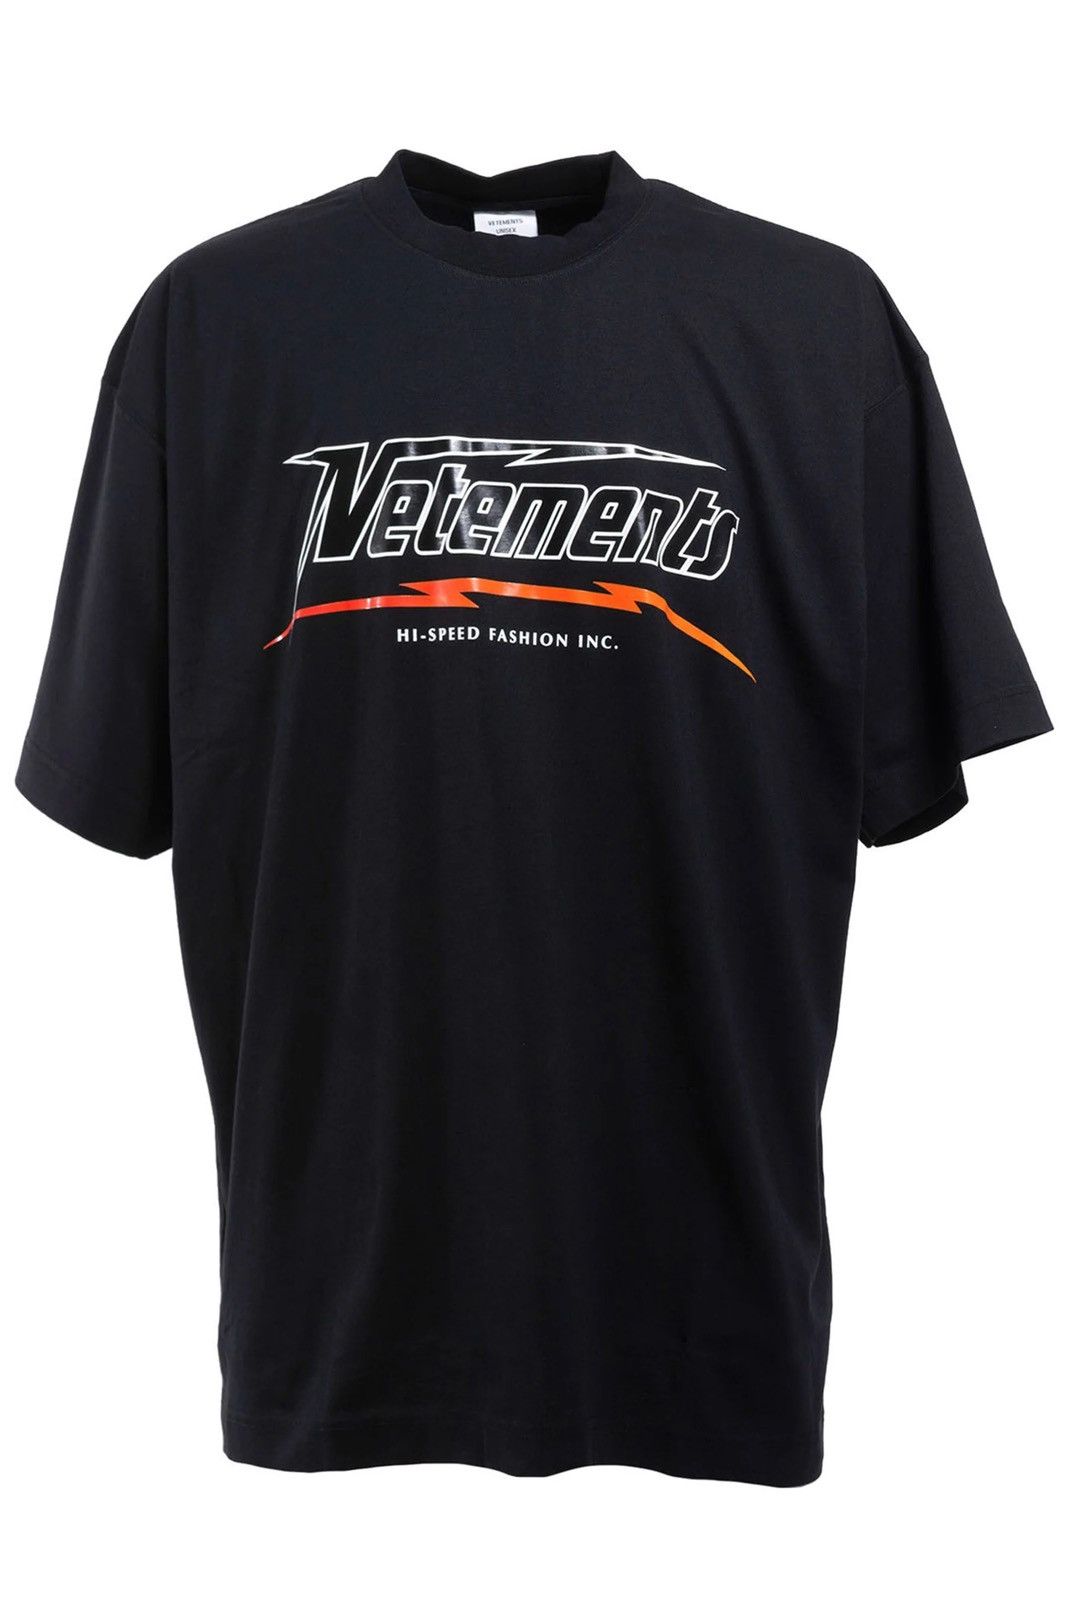 Vetements Hi-speed T-Shirt | Grailed